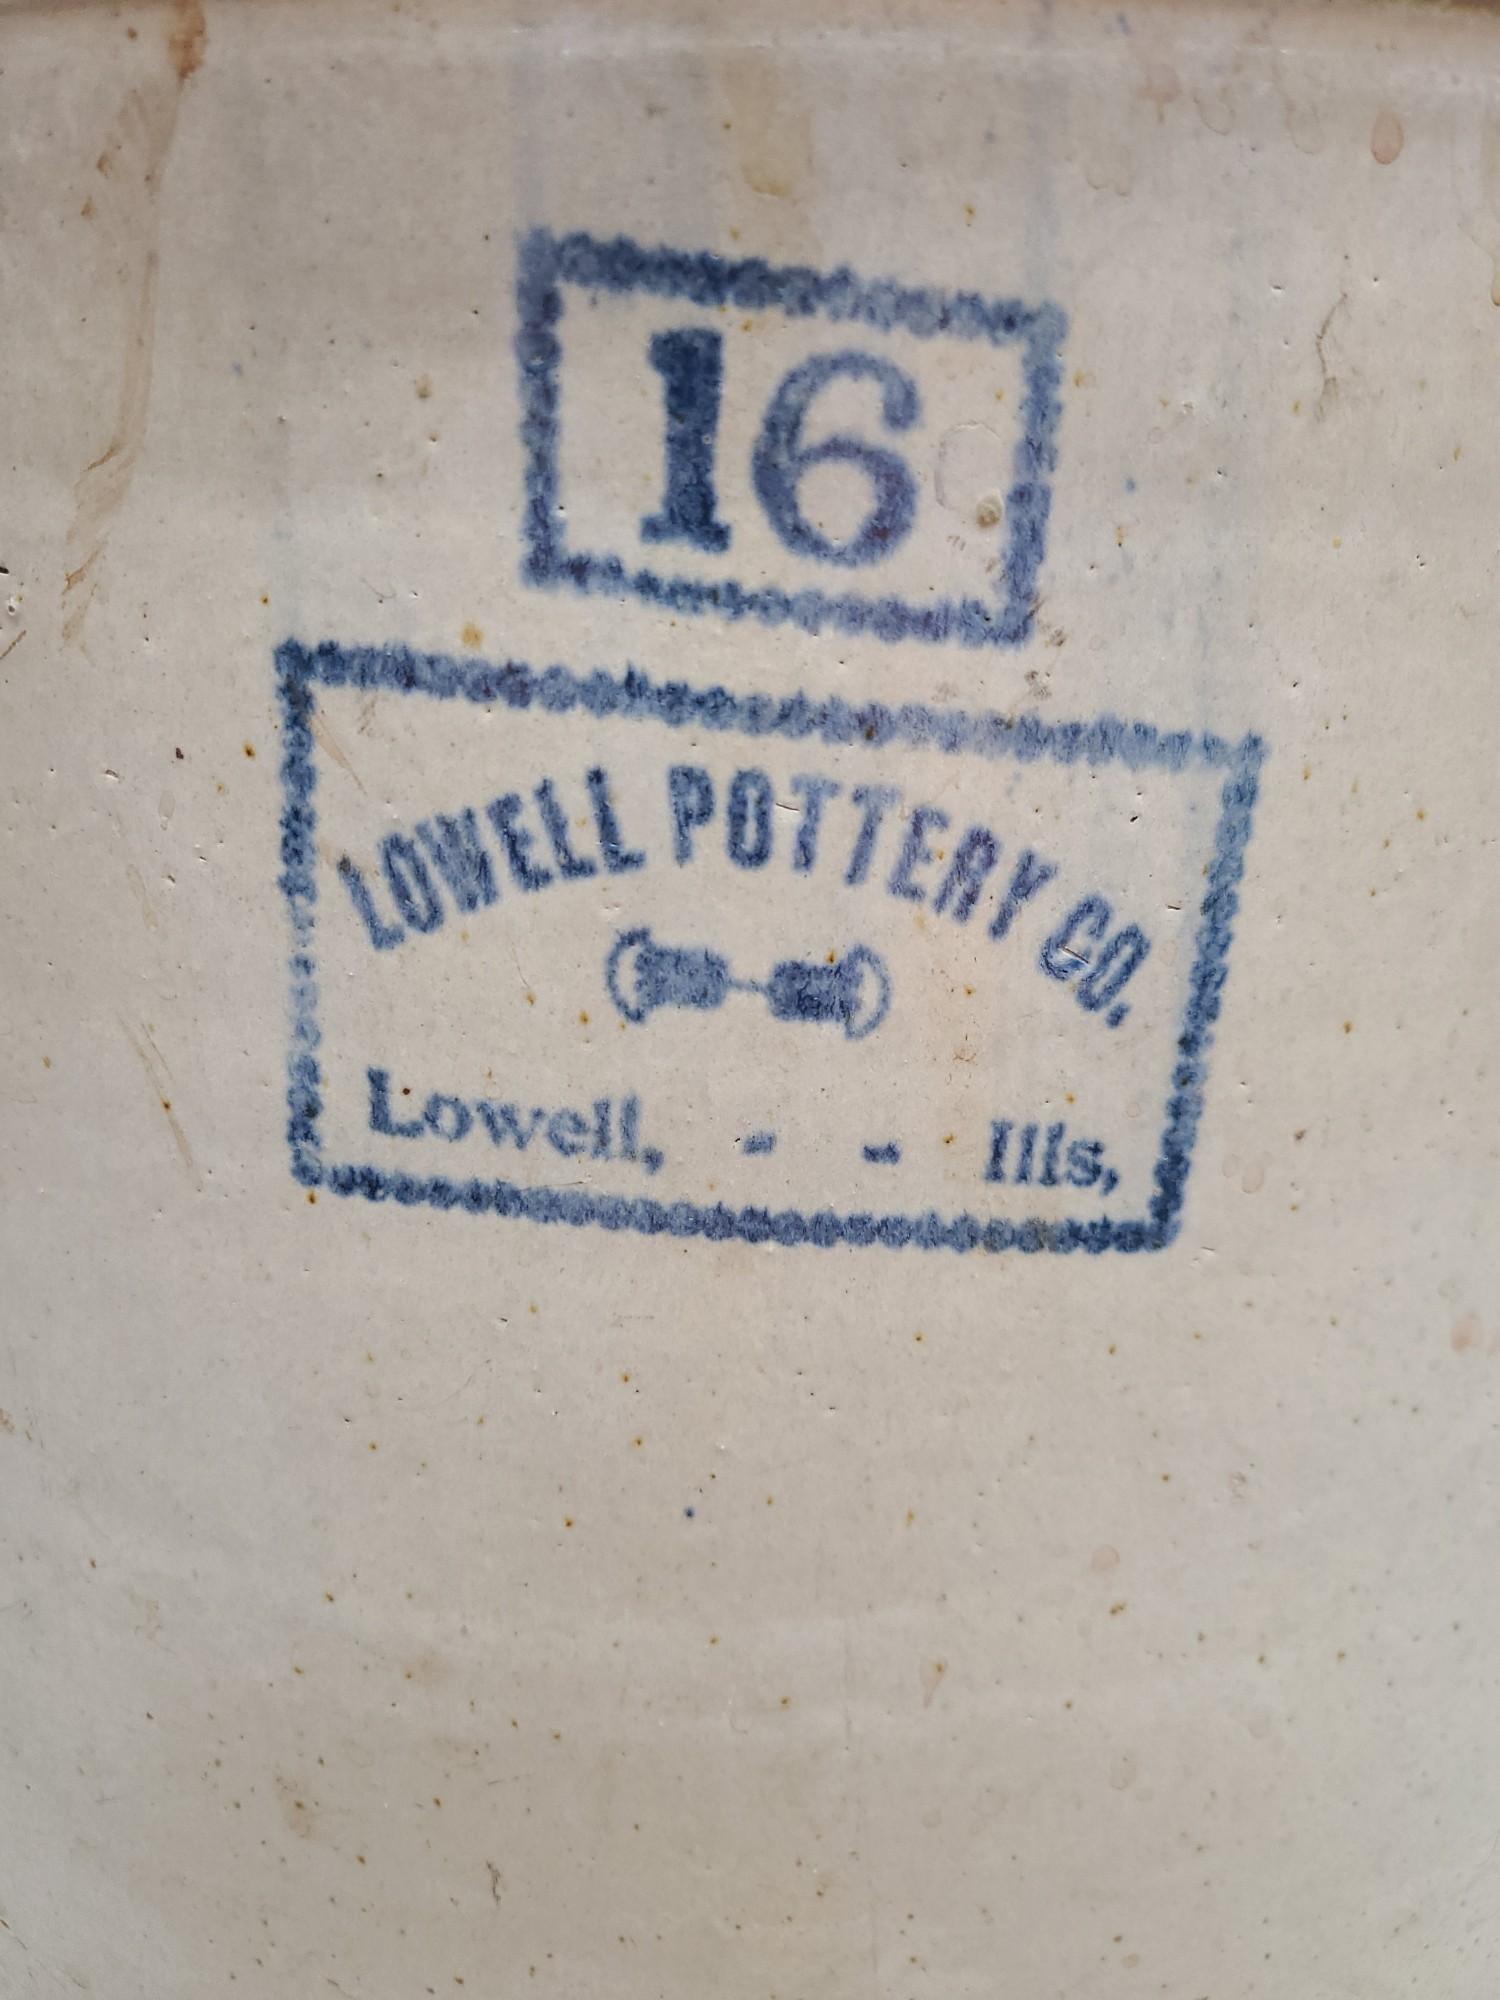 # 16 Lowell PotteryCo.